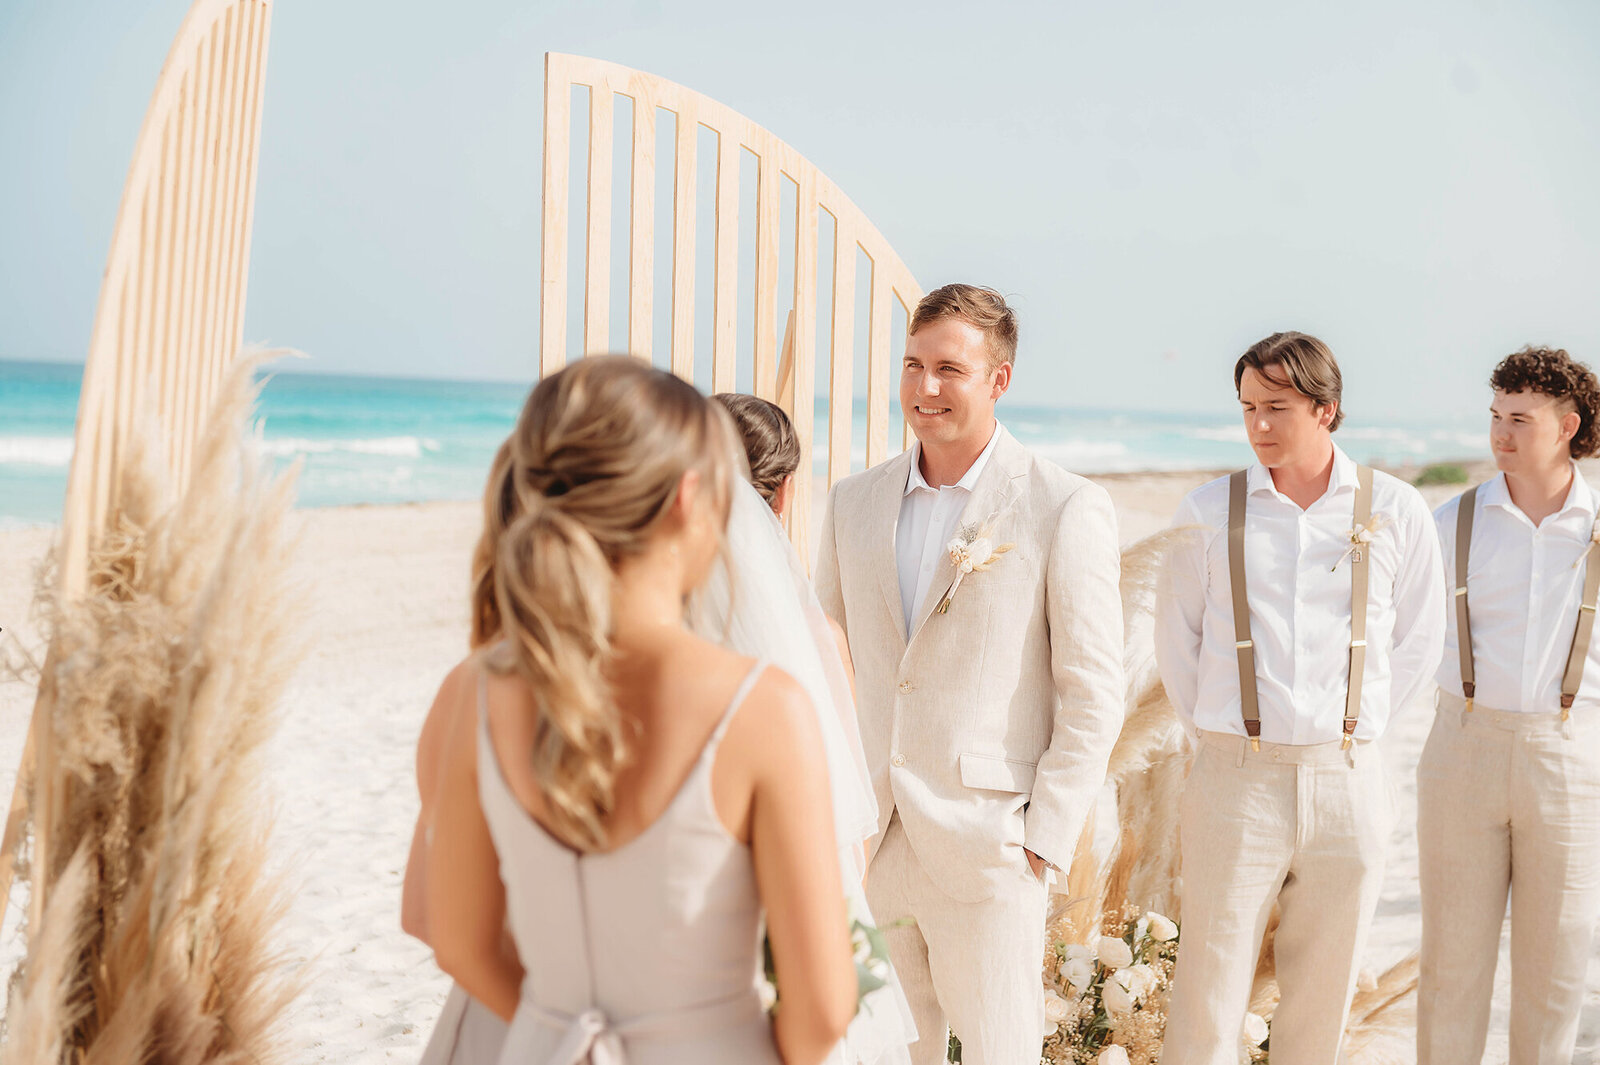 Destination Wedding at Live Aqua in Cancun Mexico.